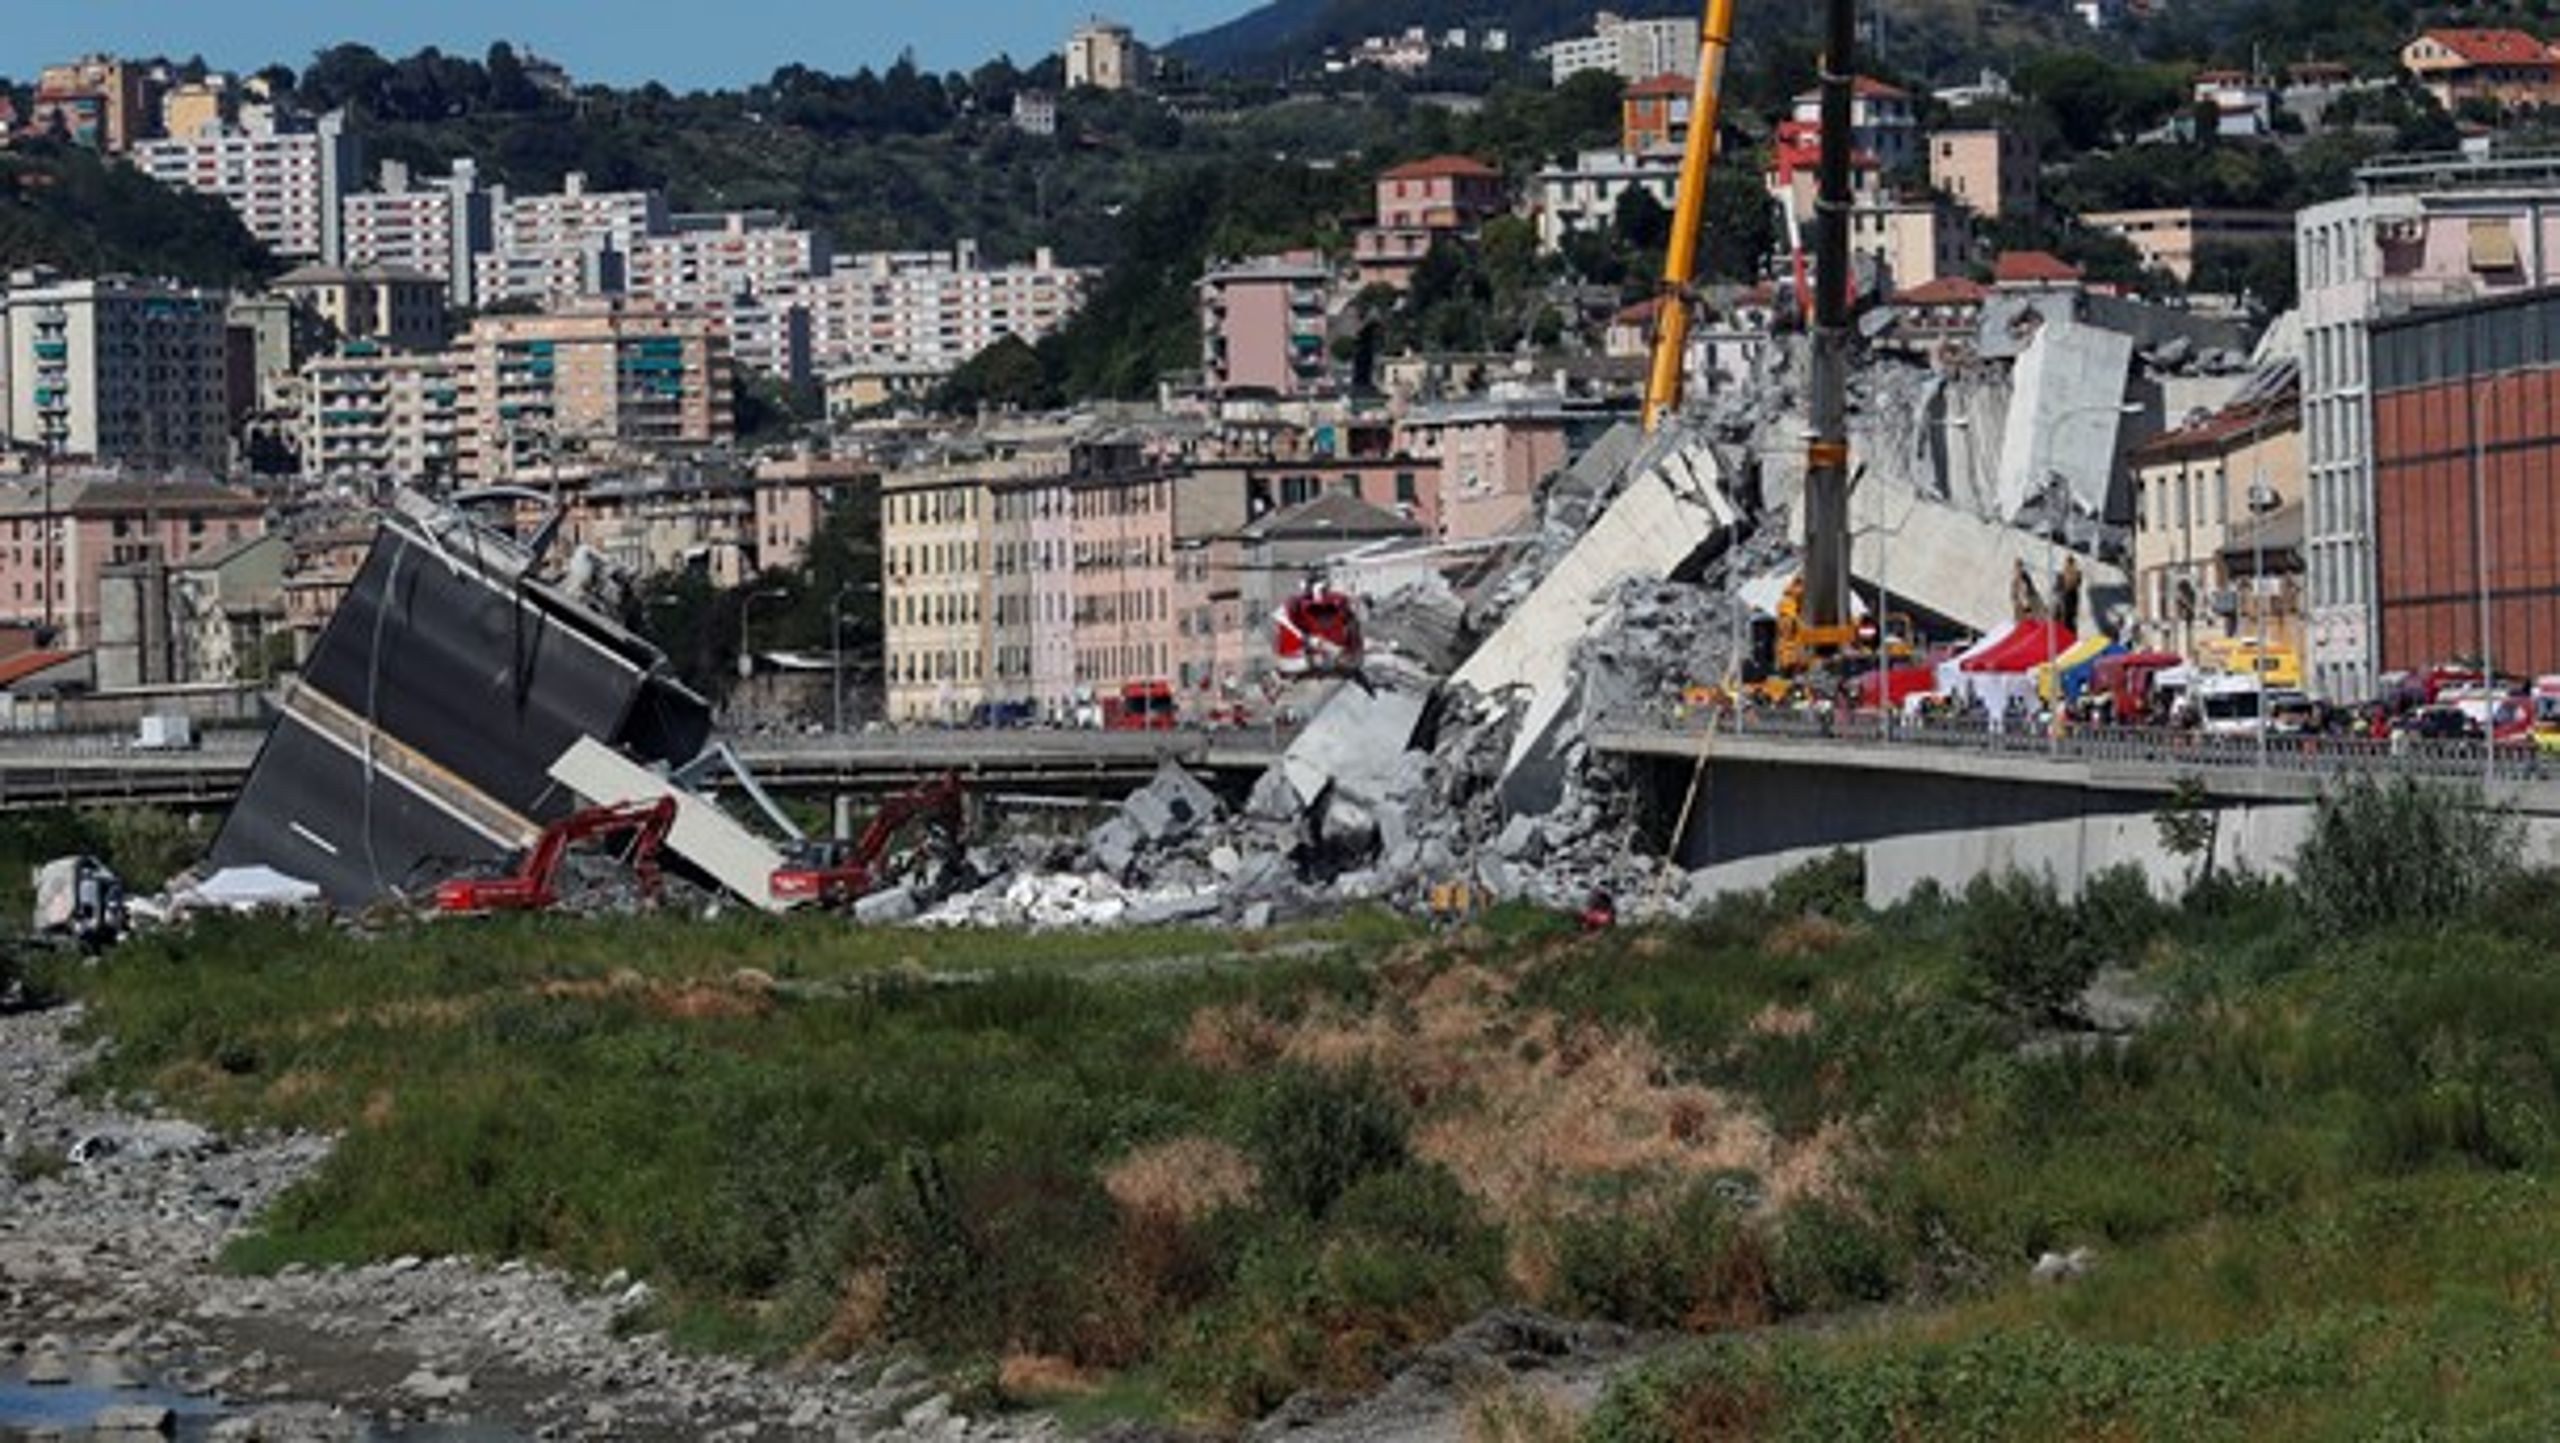 Det voldsomme bro-kollaps i Genova, Italien 15. august kostede mere end 30 mennesker livet.